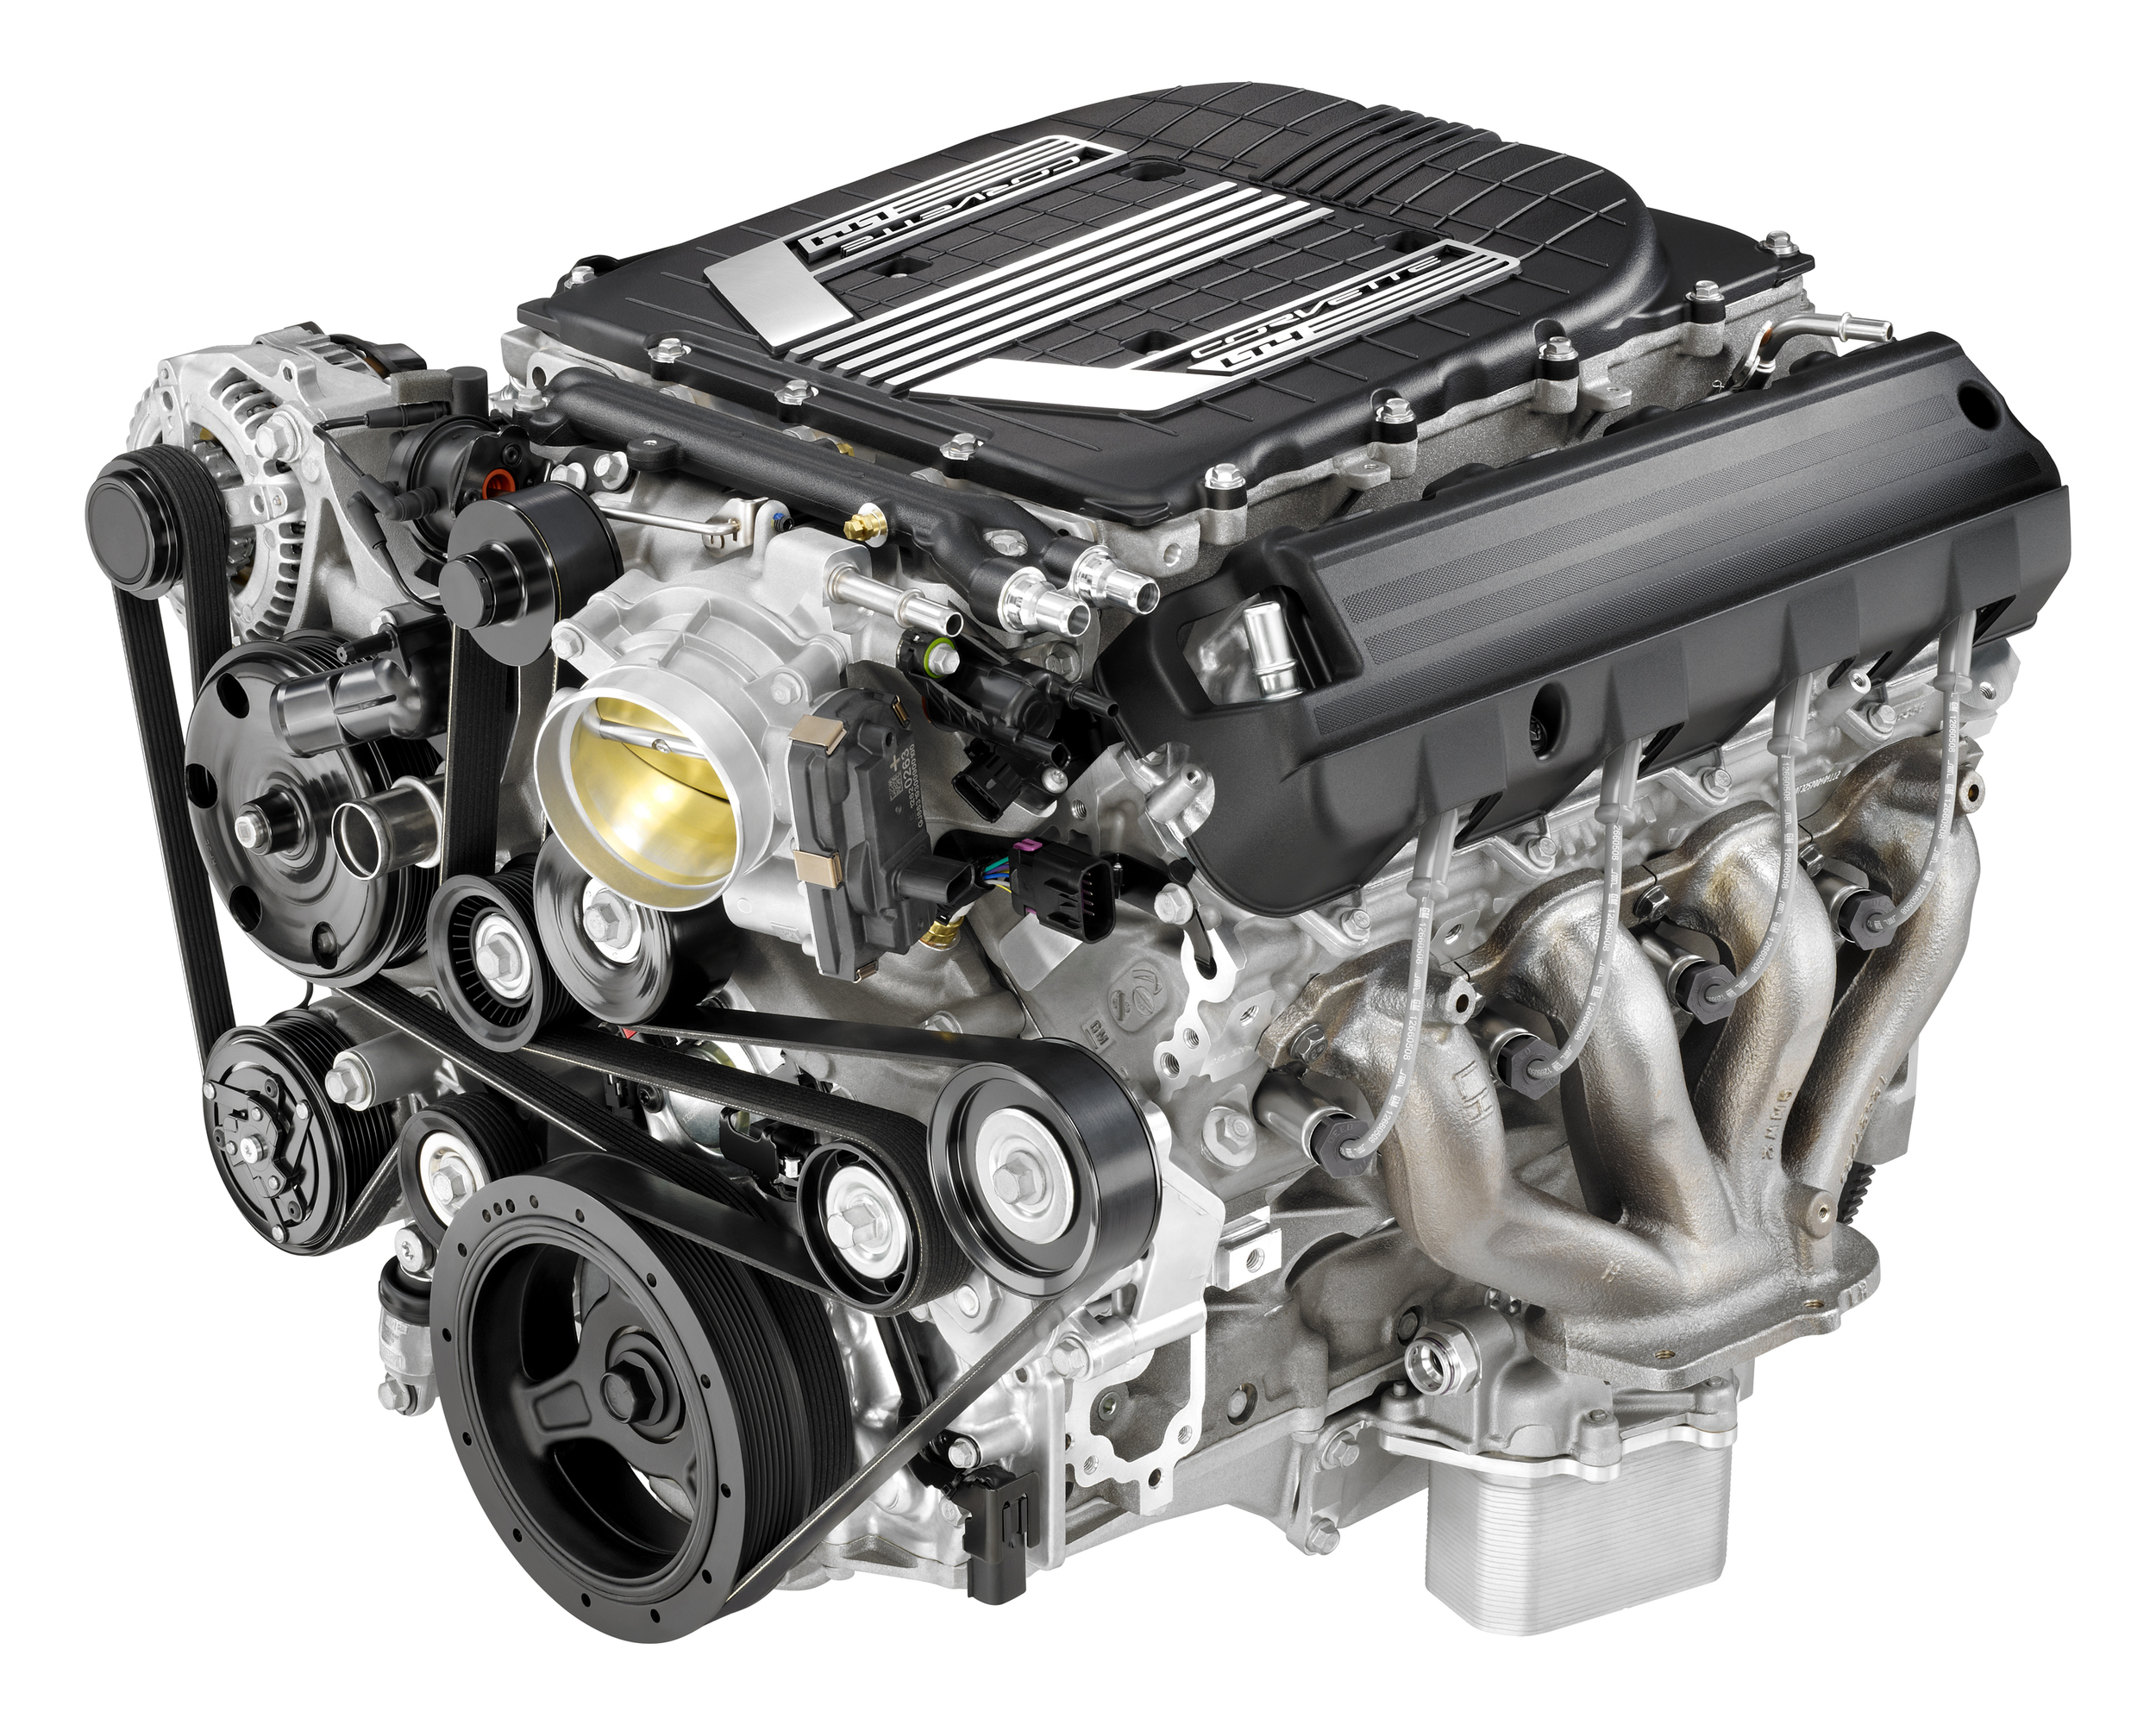  The 6.2-litre, 650 hp supercharged LT4 V8. 